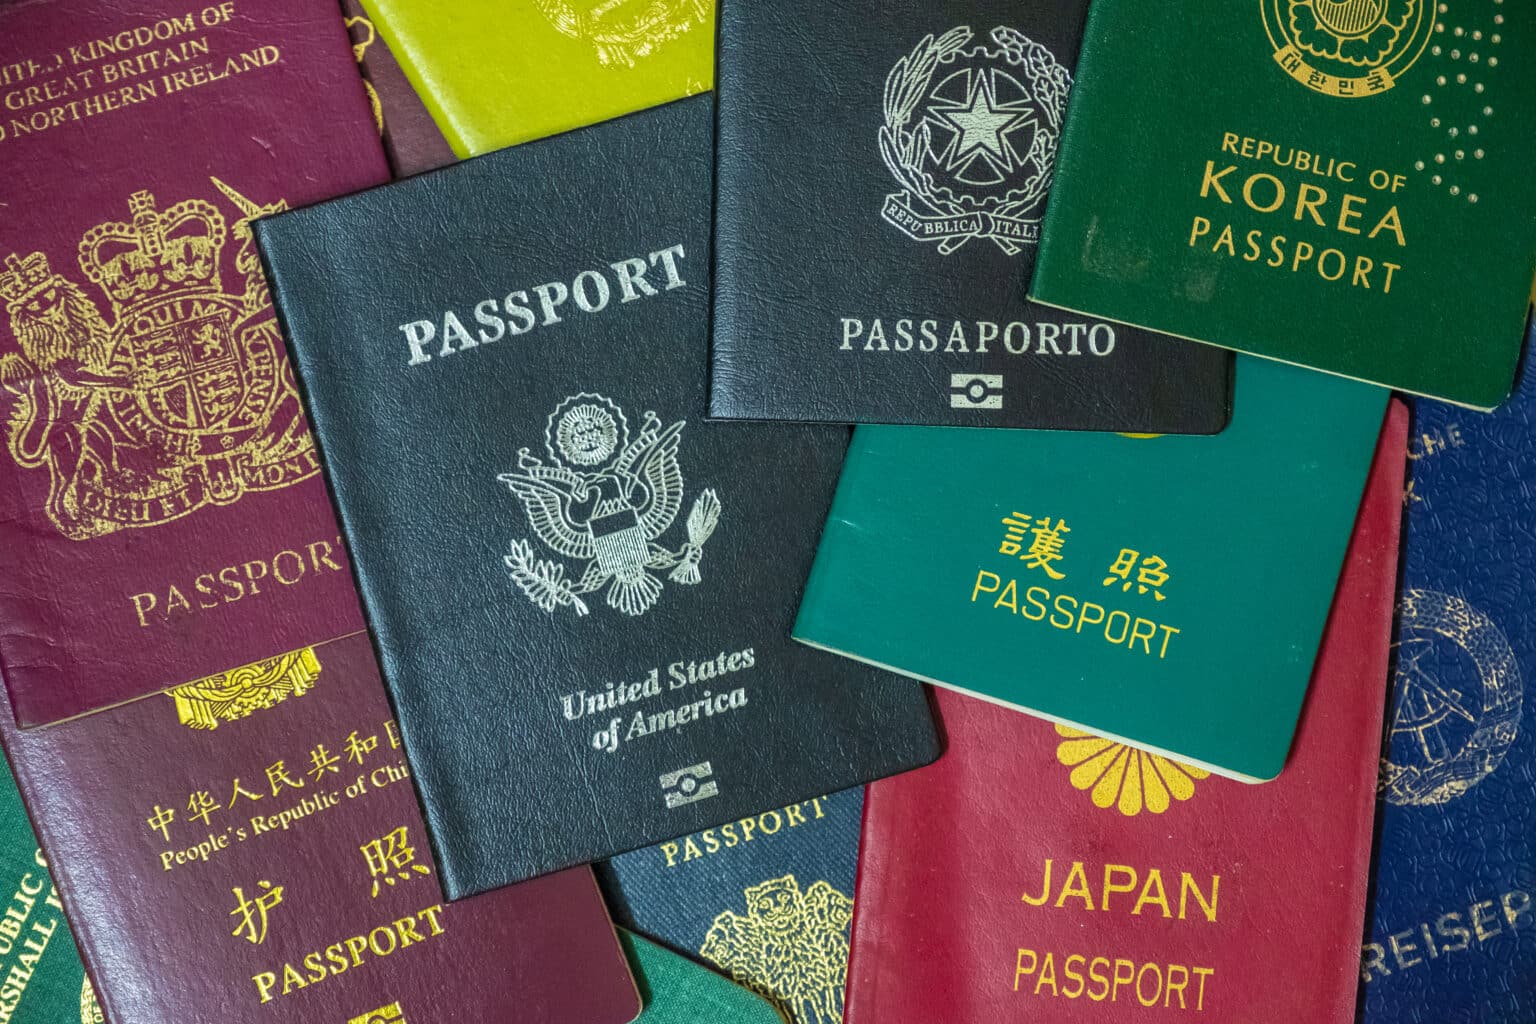 Passport - law enforcement documentation